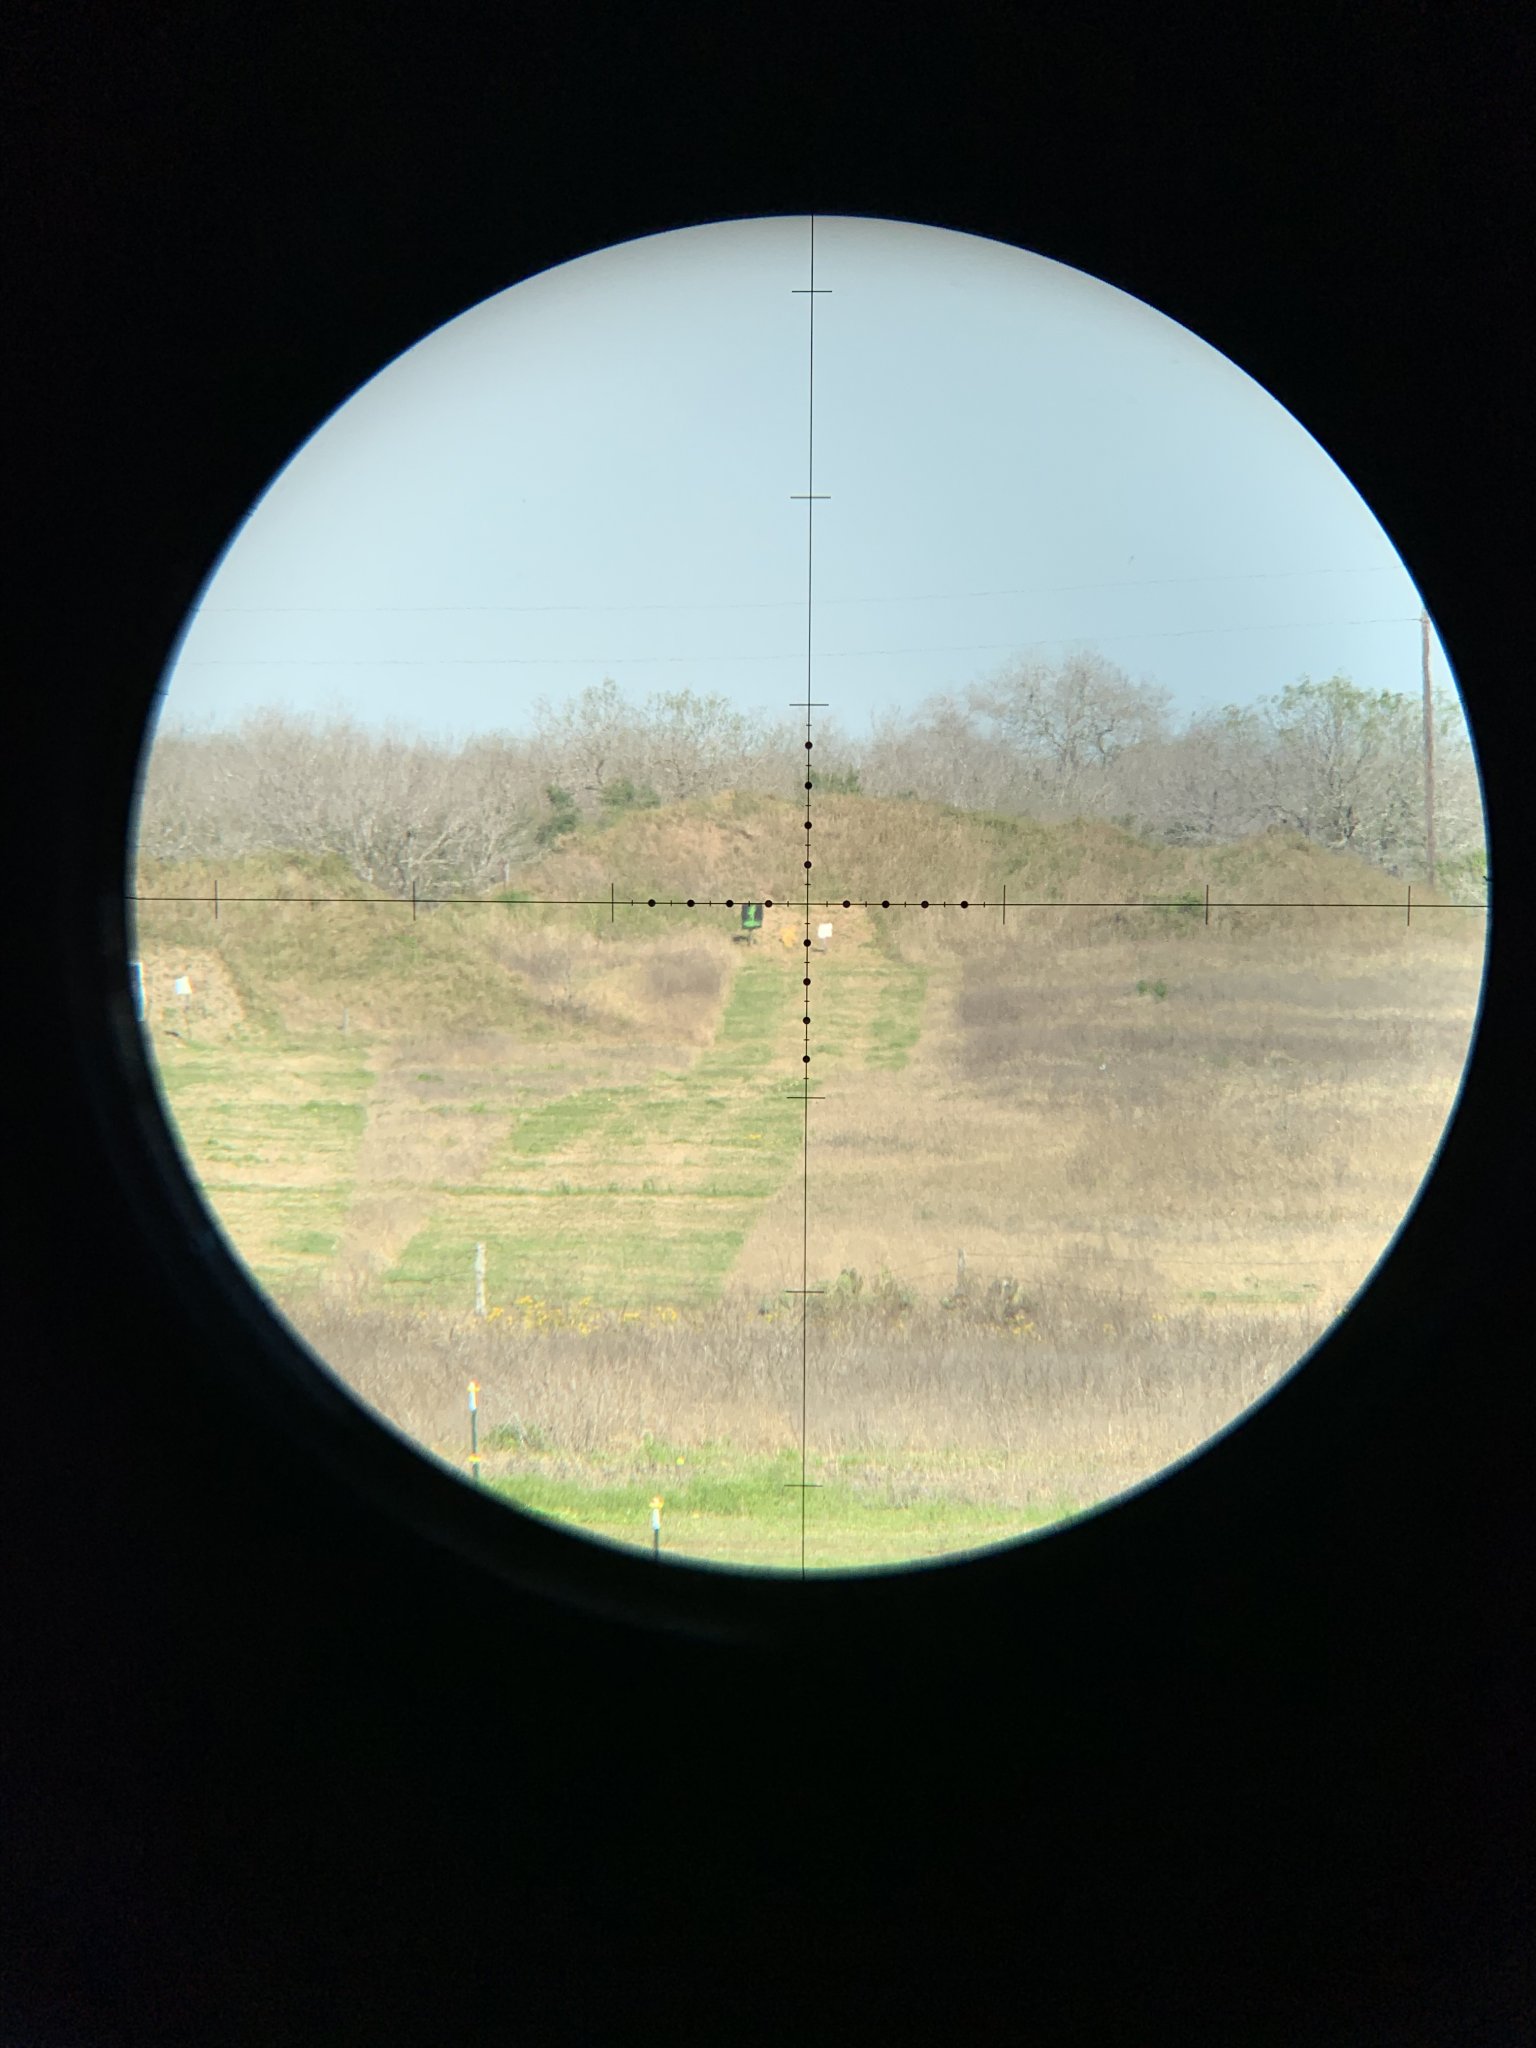 Hensholdt Spotter 60 Reticle Change? | Sniper's Hide Forum